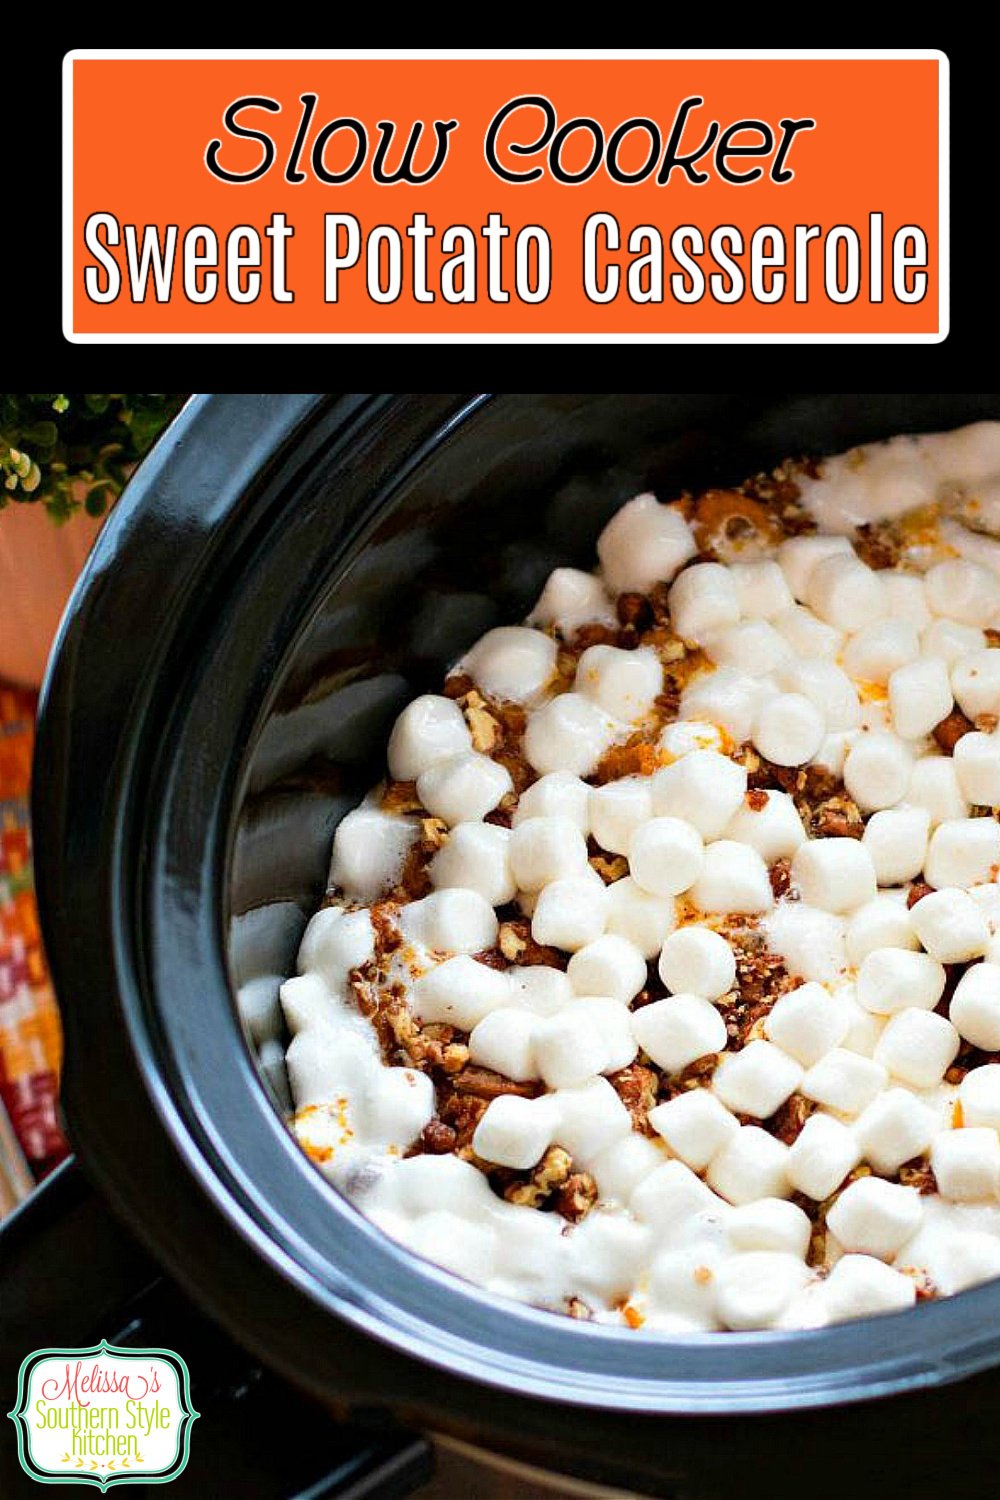 Crockpot Sweet Potato Casserole - STOCKPILING MOMS™